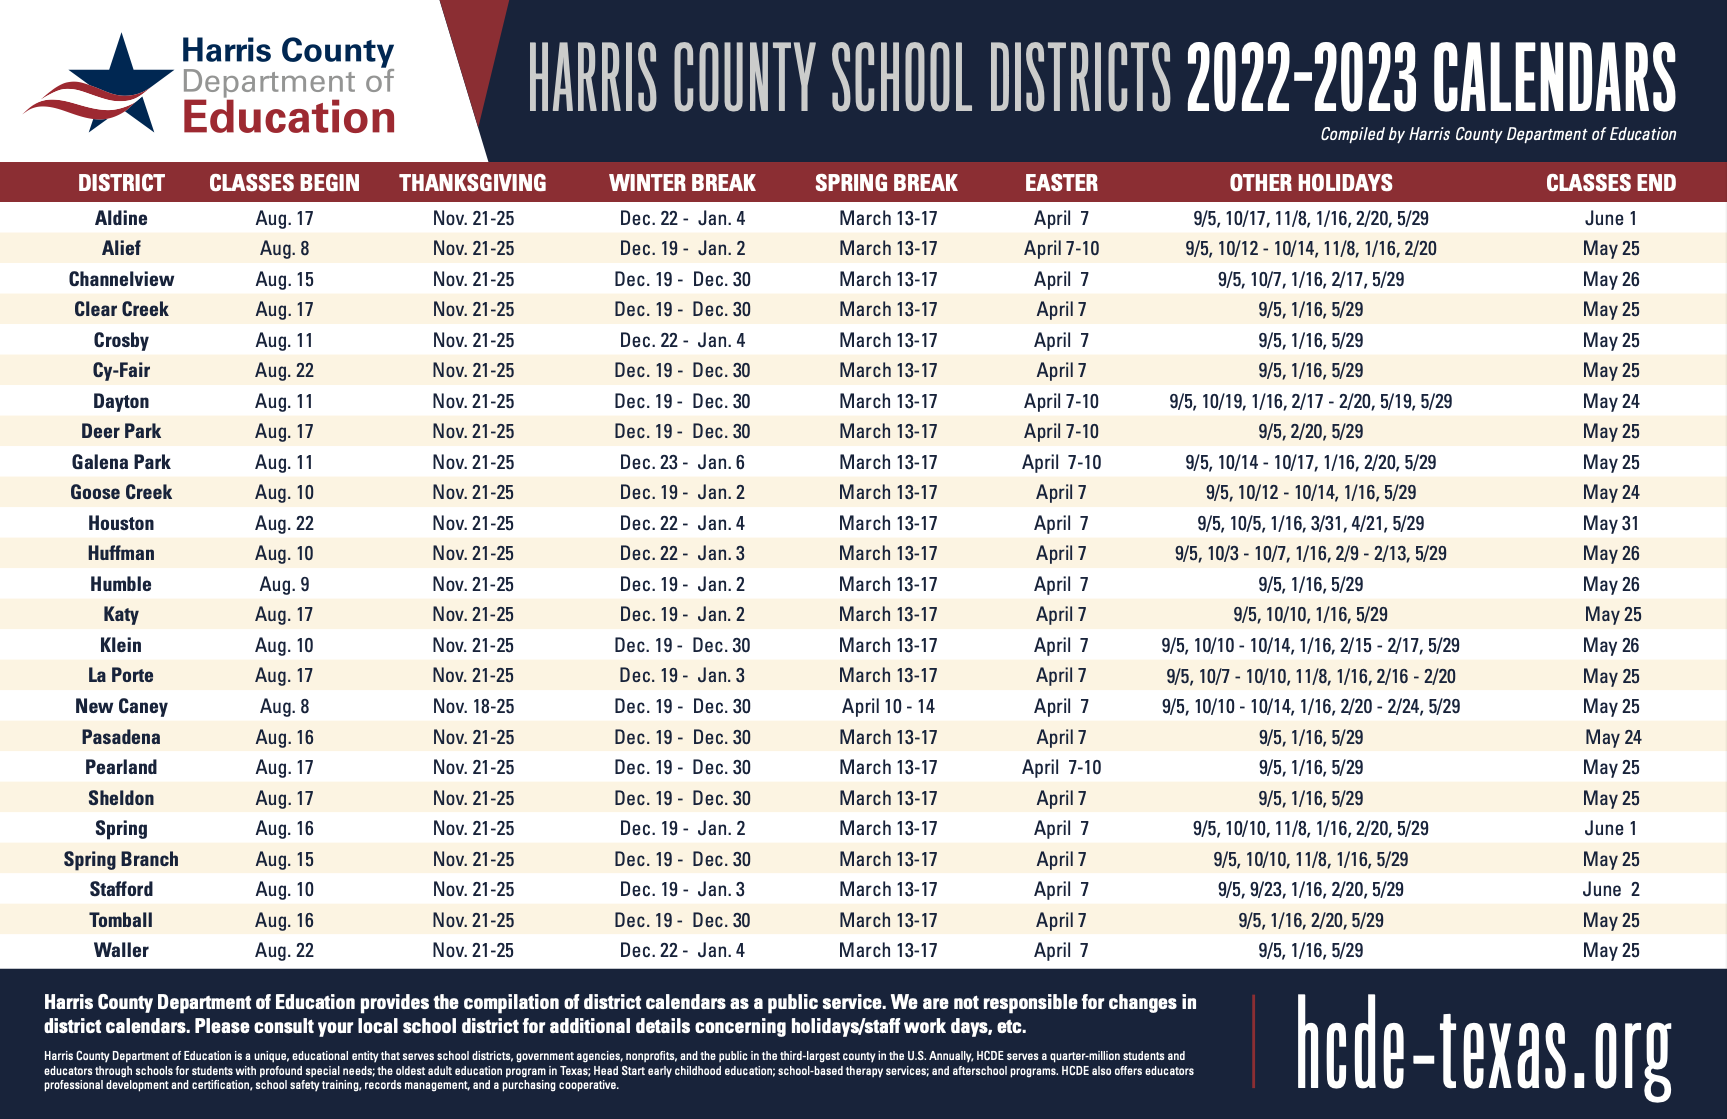 HCDE releases 2022-2023 comprehensive school calendar for 25 Harris